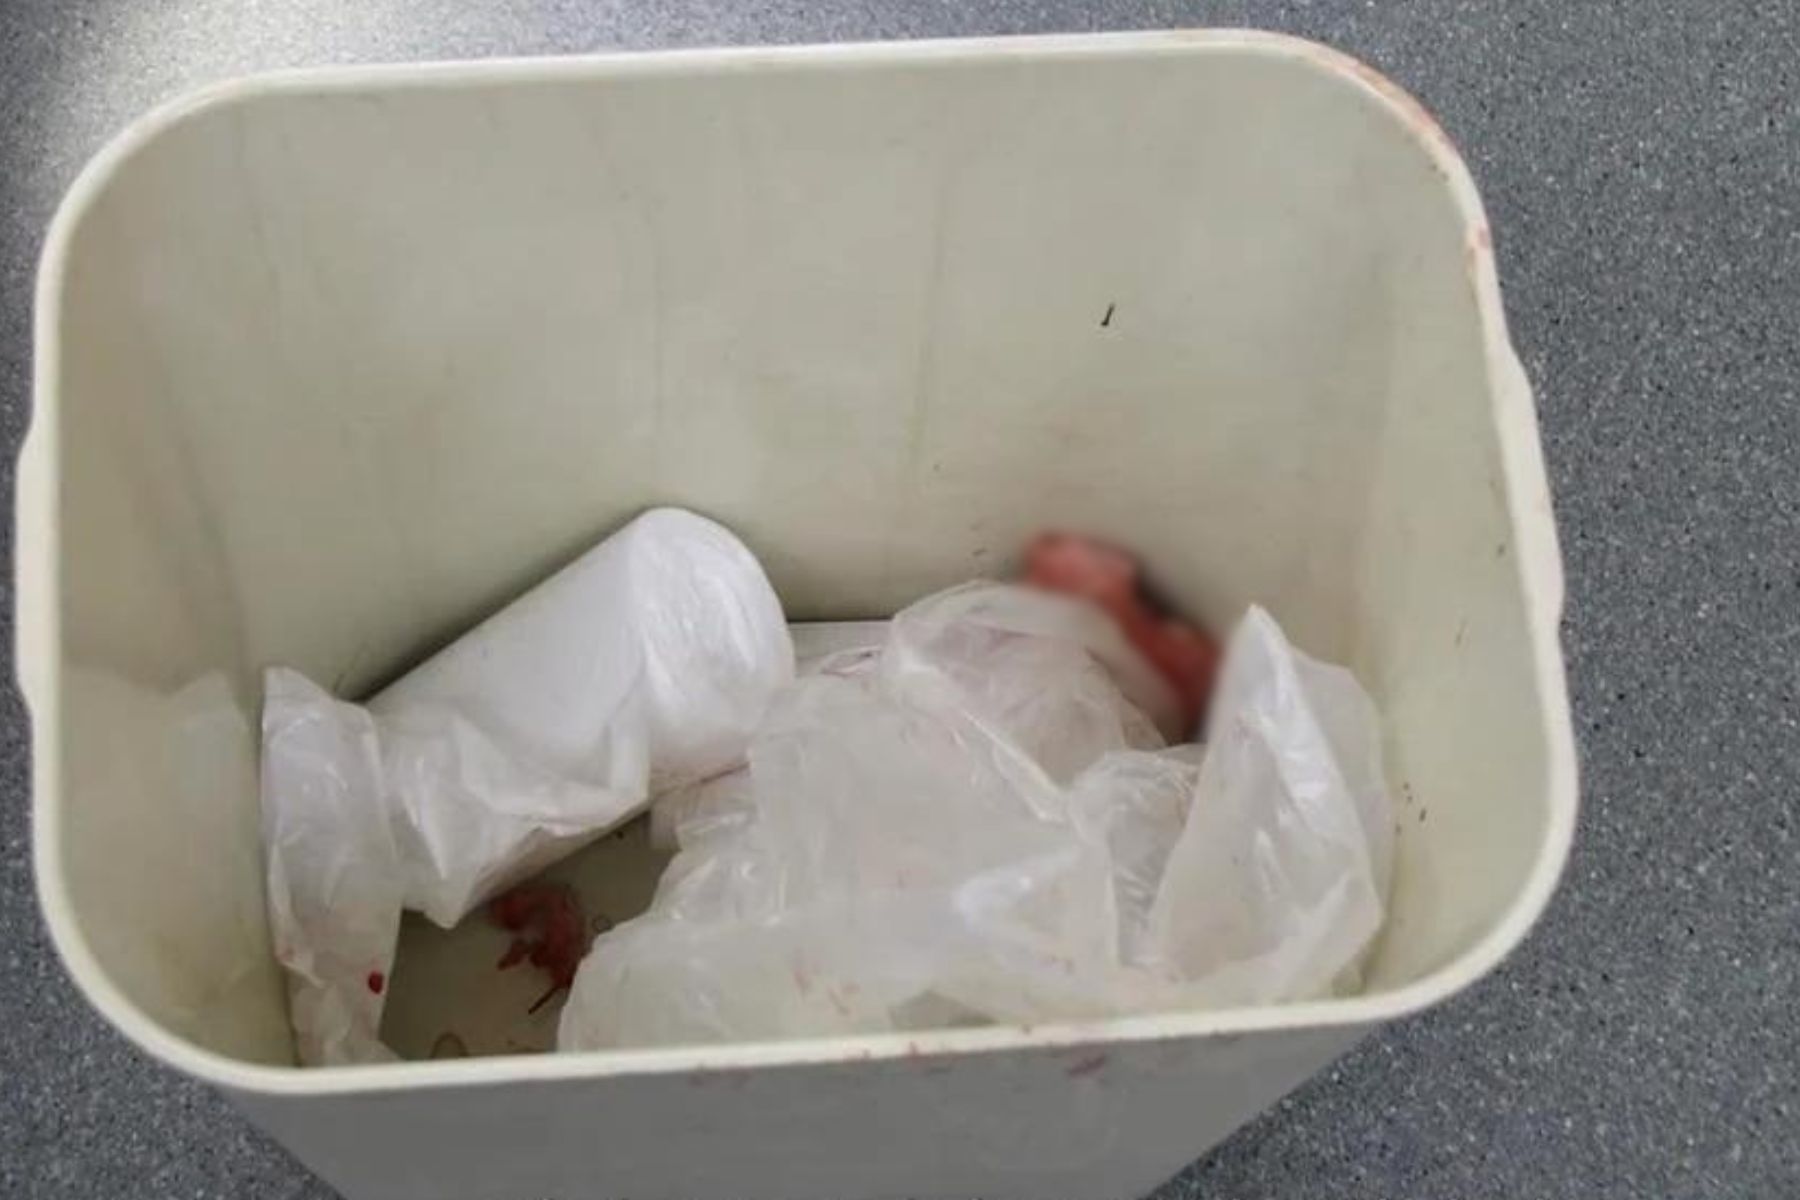 Images of Alexee Trevizo's Baby Boy in Hospital Bathroom 